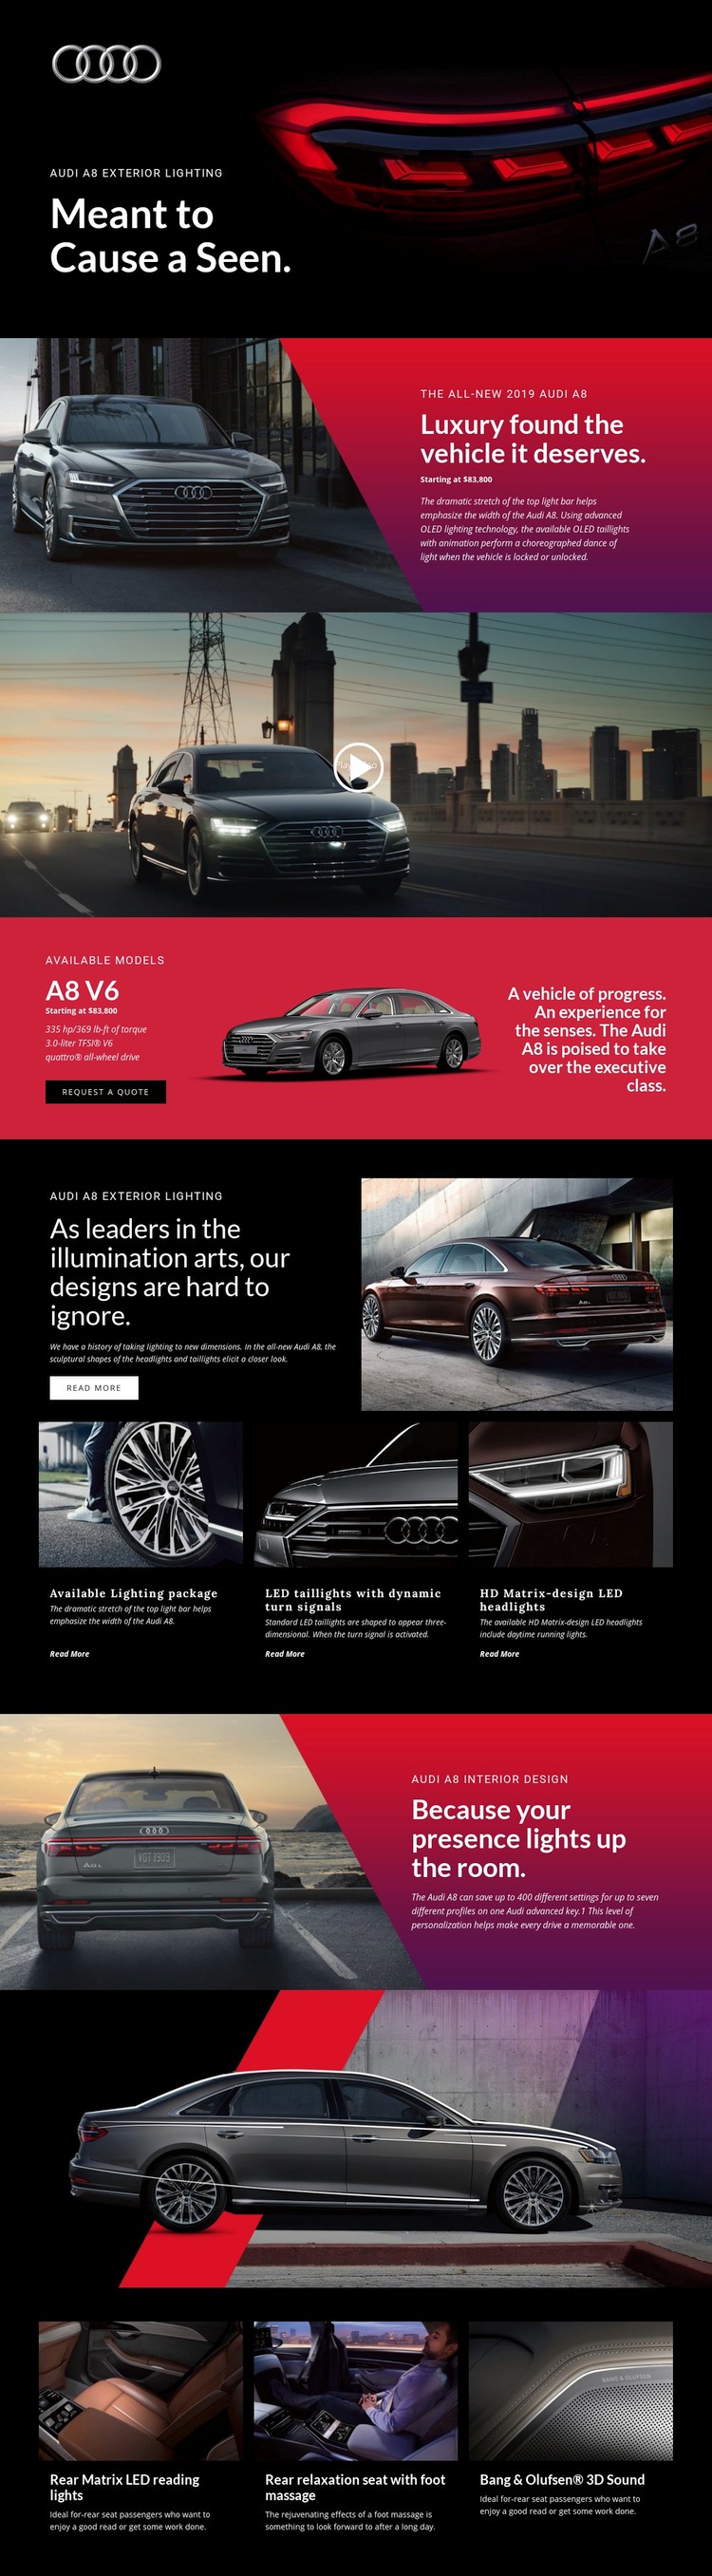 Audi luxury cars Webflow Template Alternative